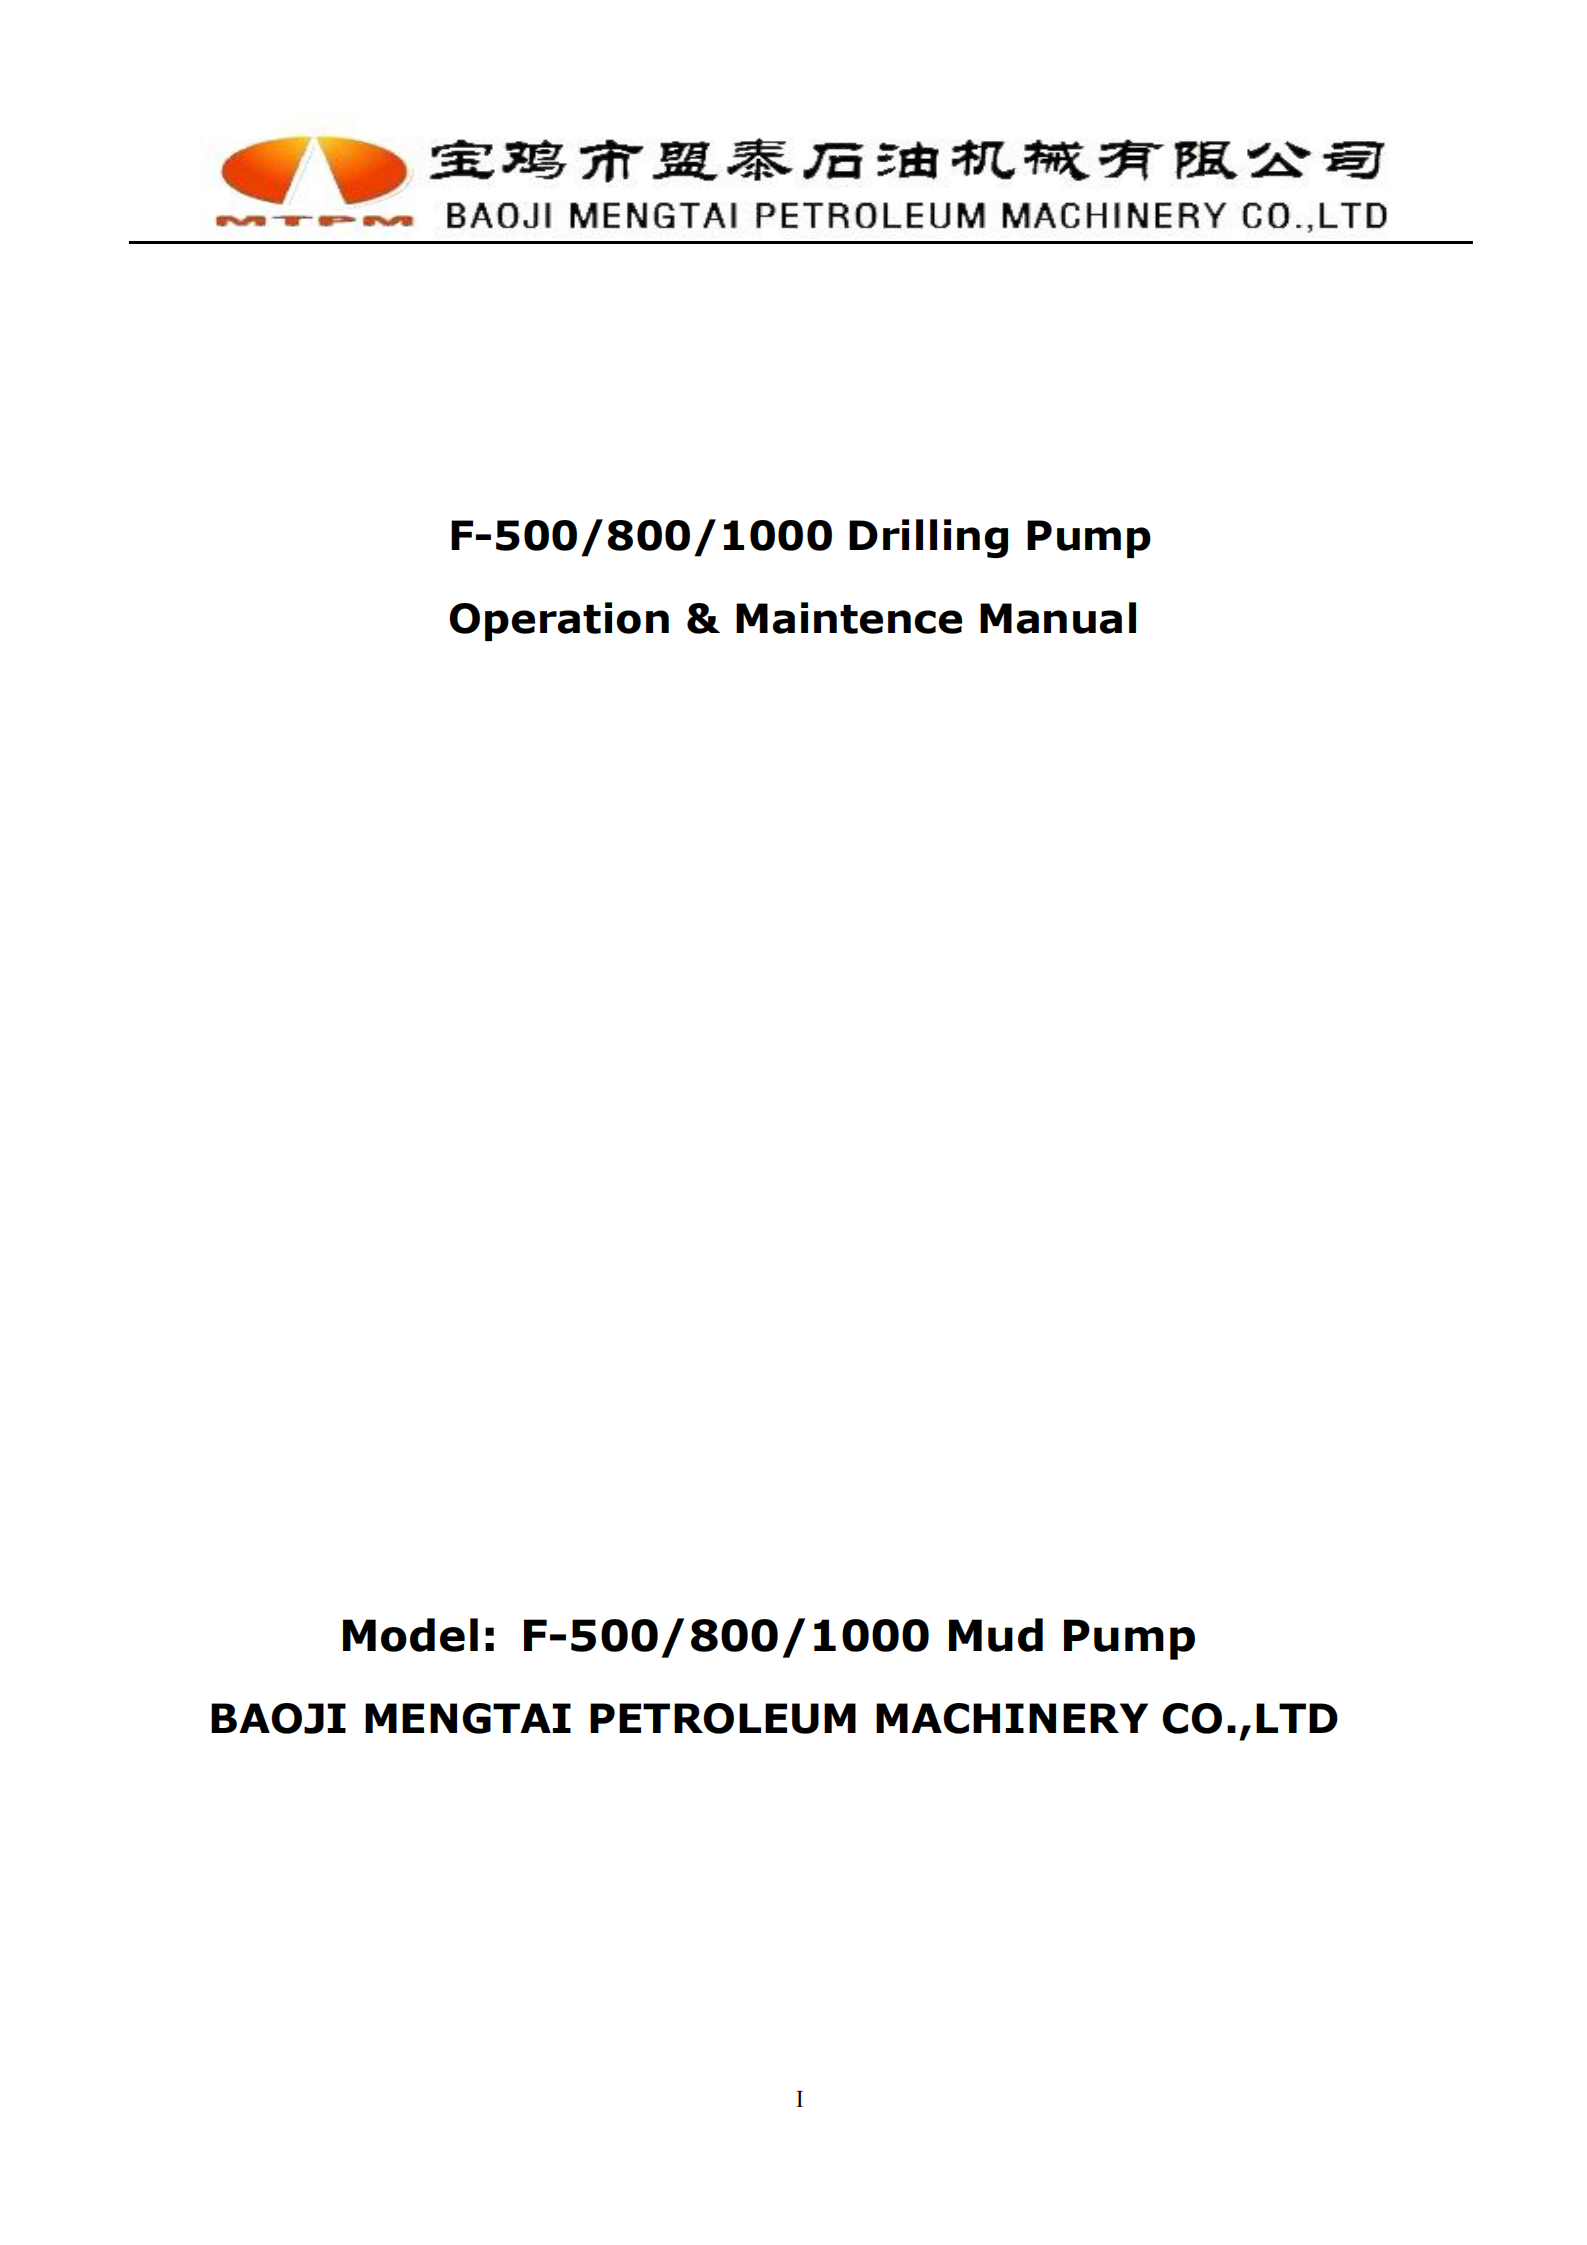 F-500/800/1000 MUD PUMP MANUAL